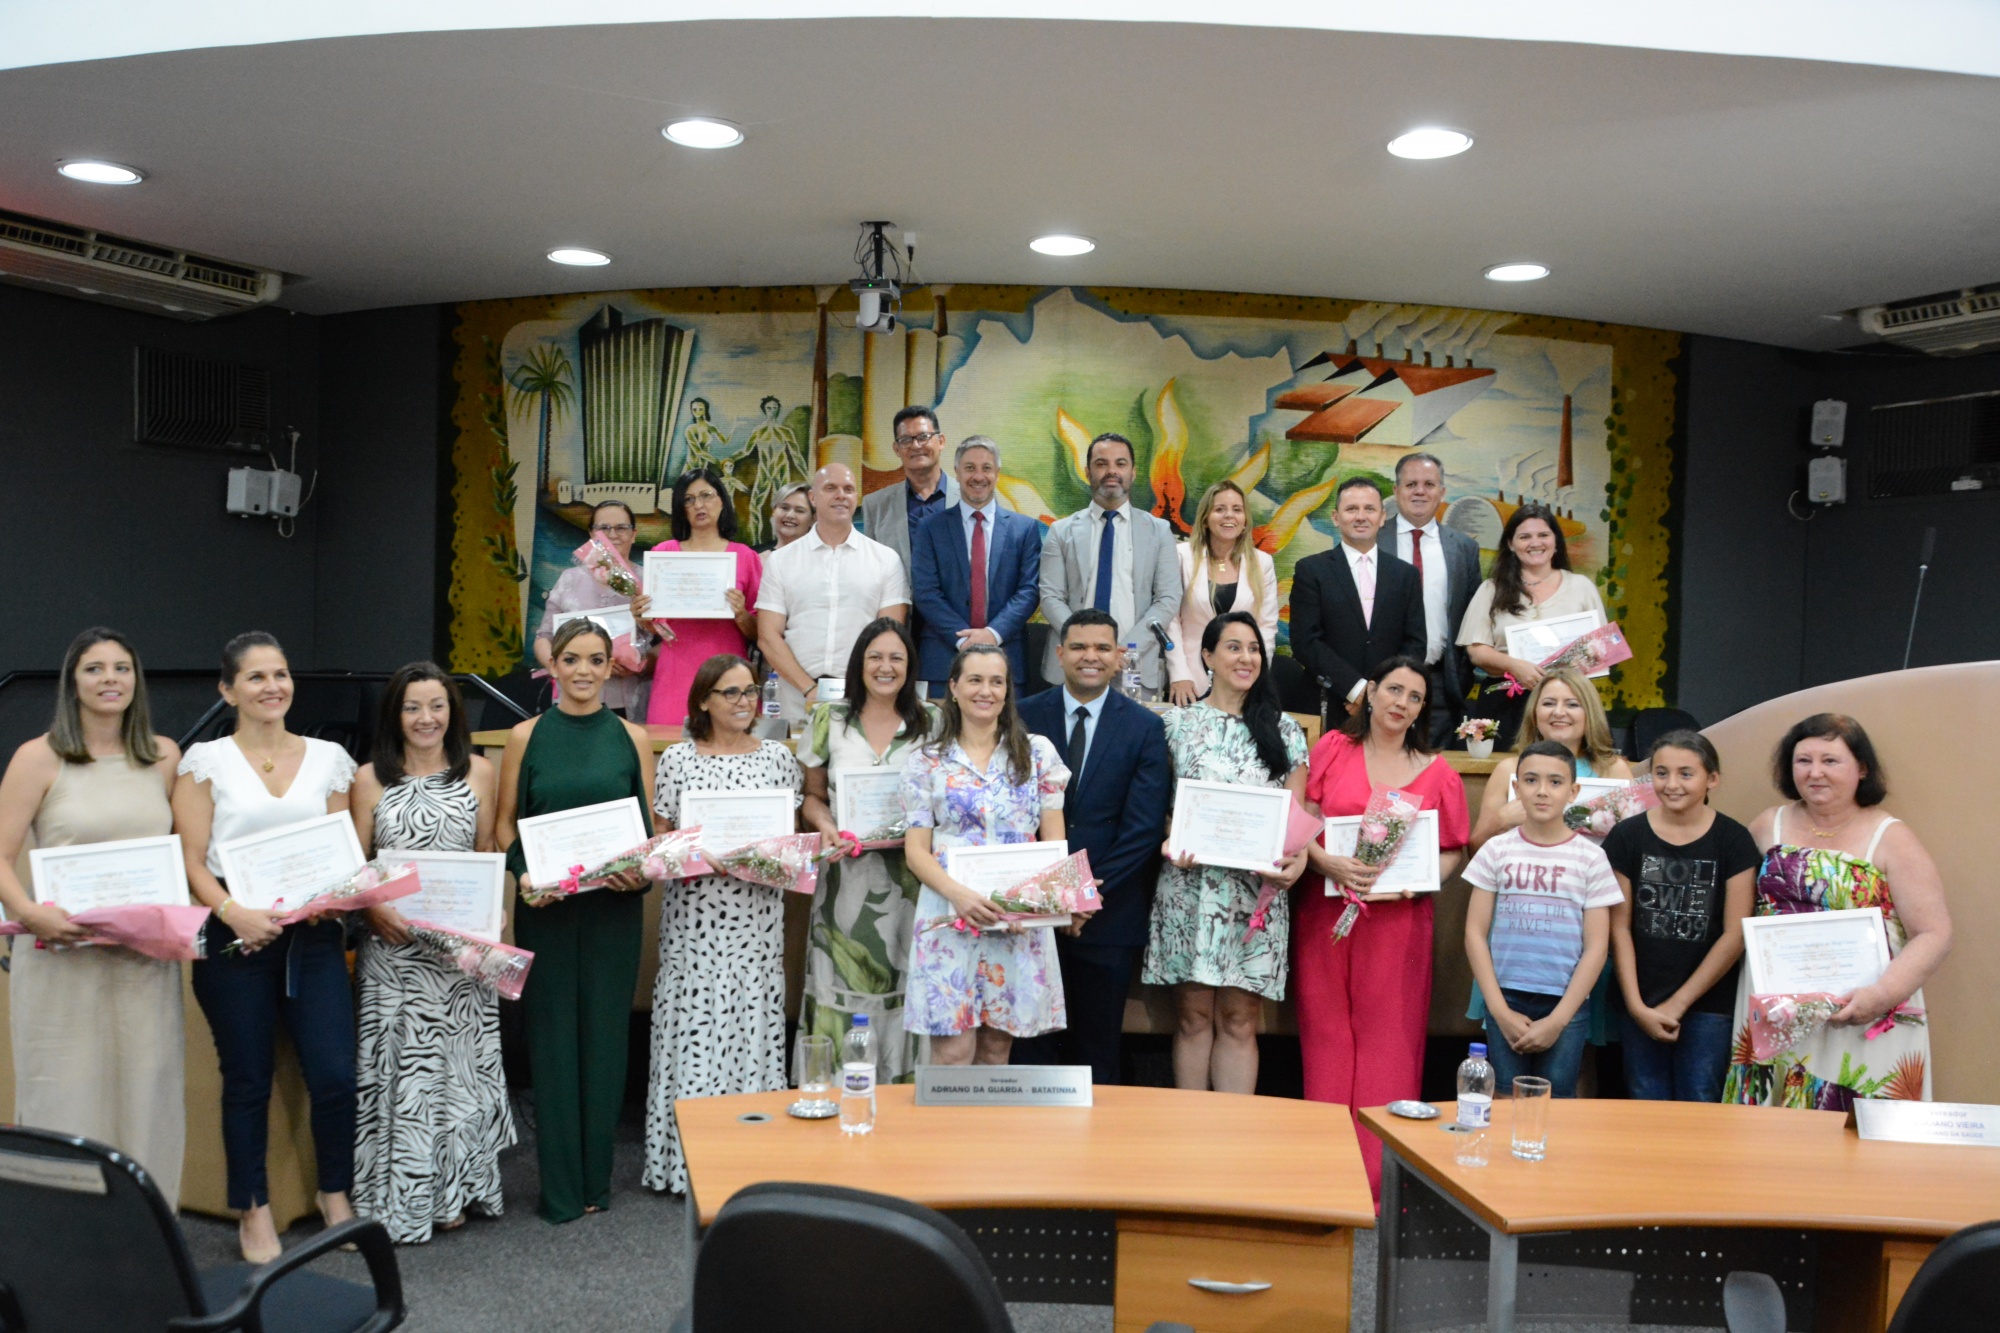 Educadoras recebem o Diploma de Honra ao Mérito